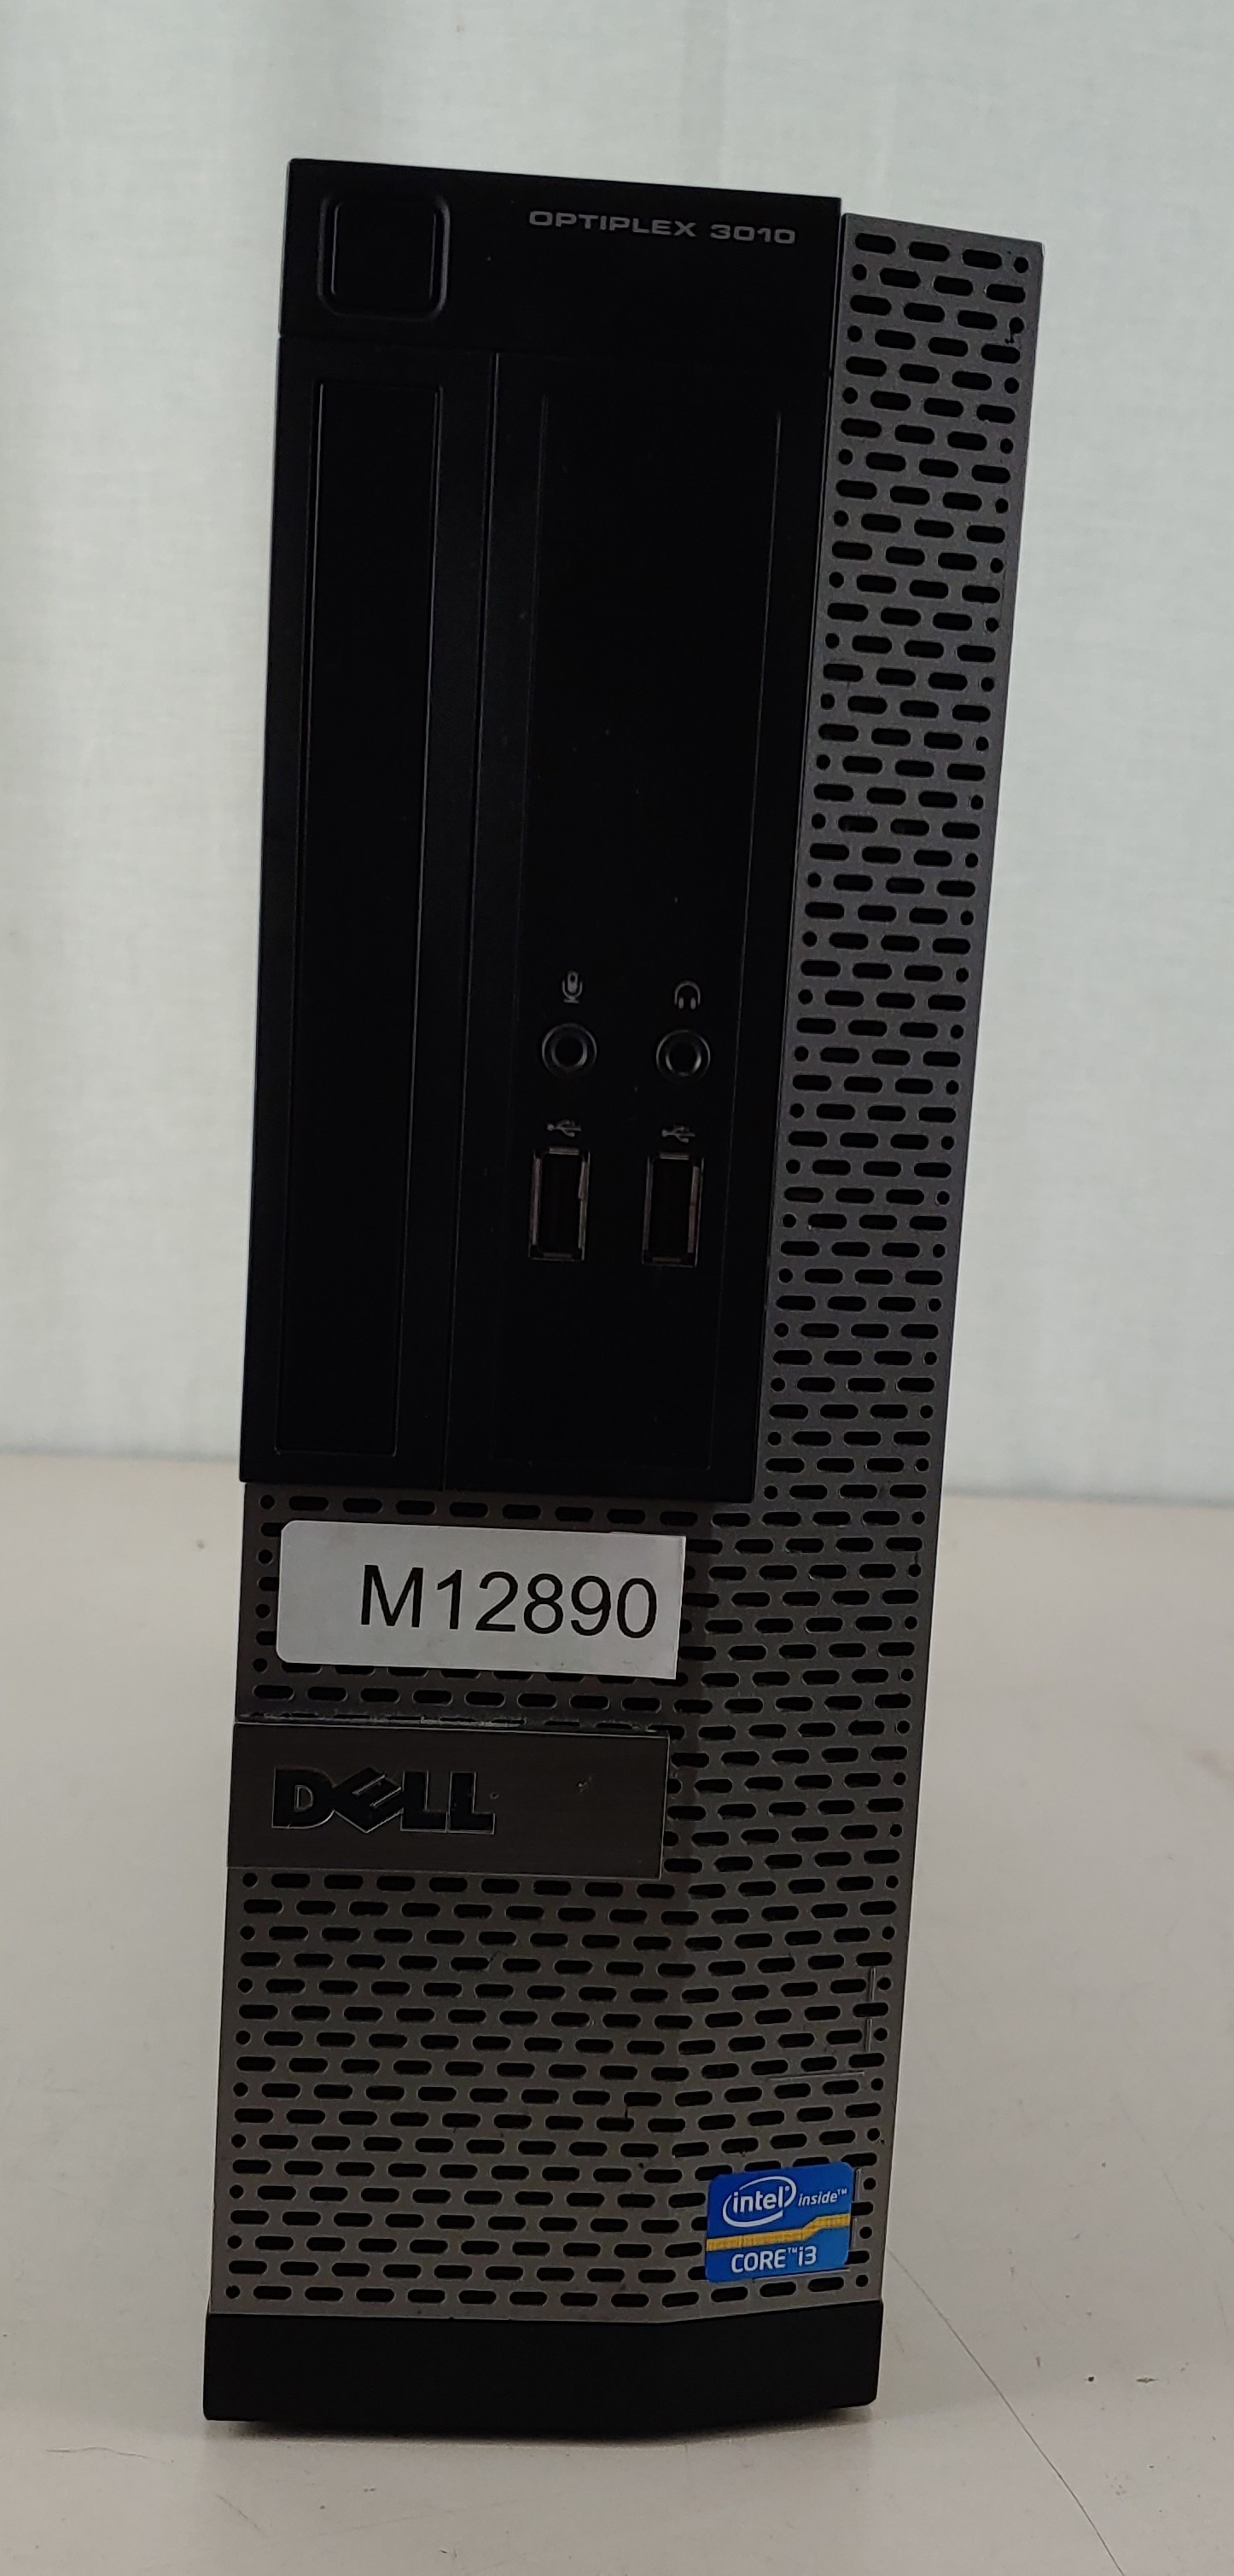 Dell OptiPlex 3010 SFF PC Intel Core i3-3240 @ 3.4GHz 4GB 250GB HDD NO OS 